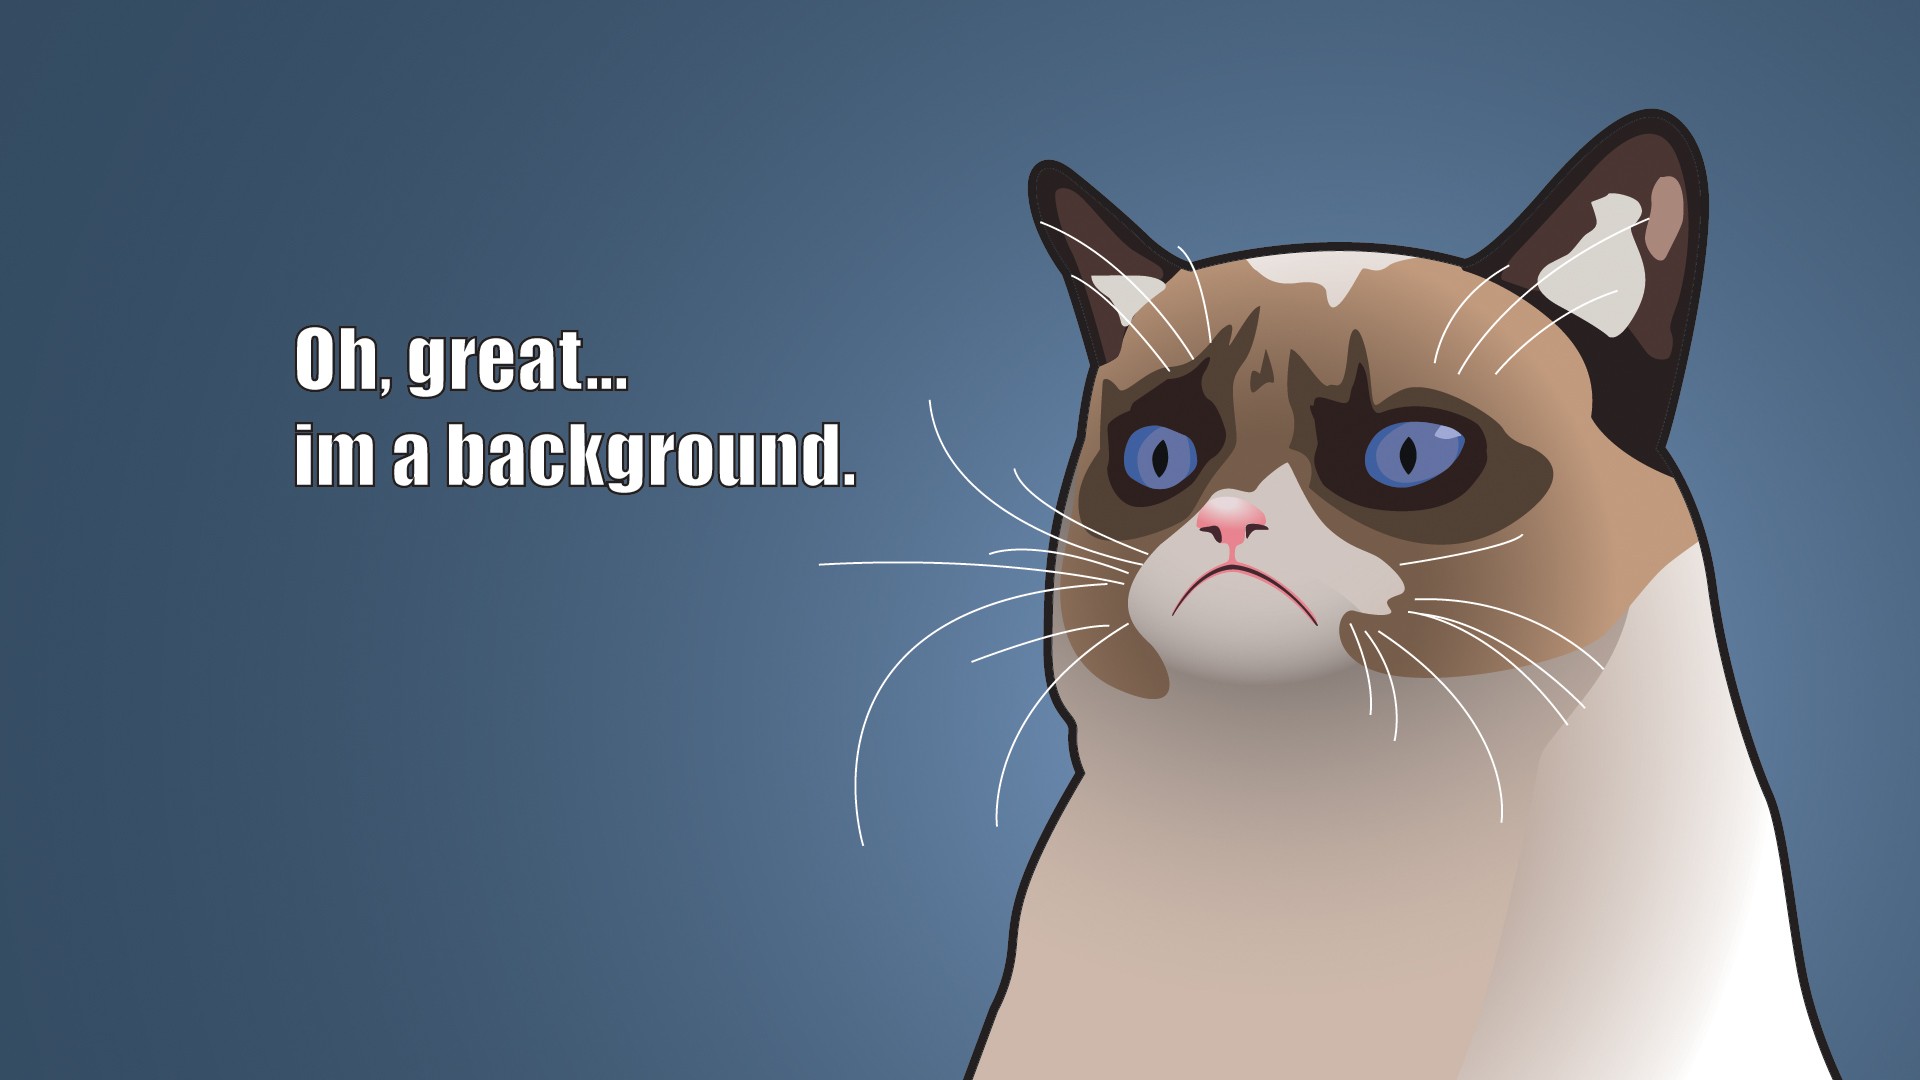 Grumpy Cat - Oh great... I'm a background